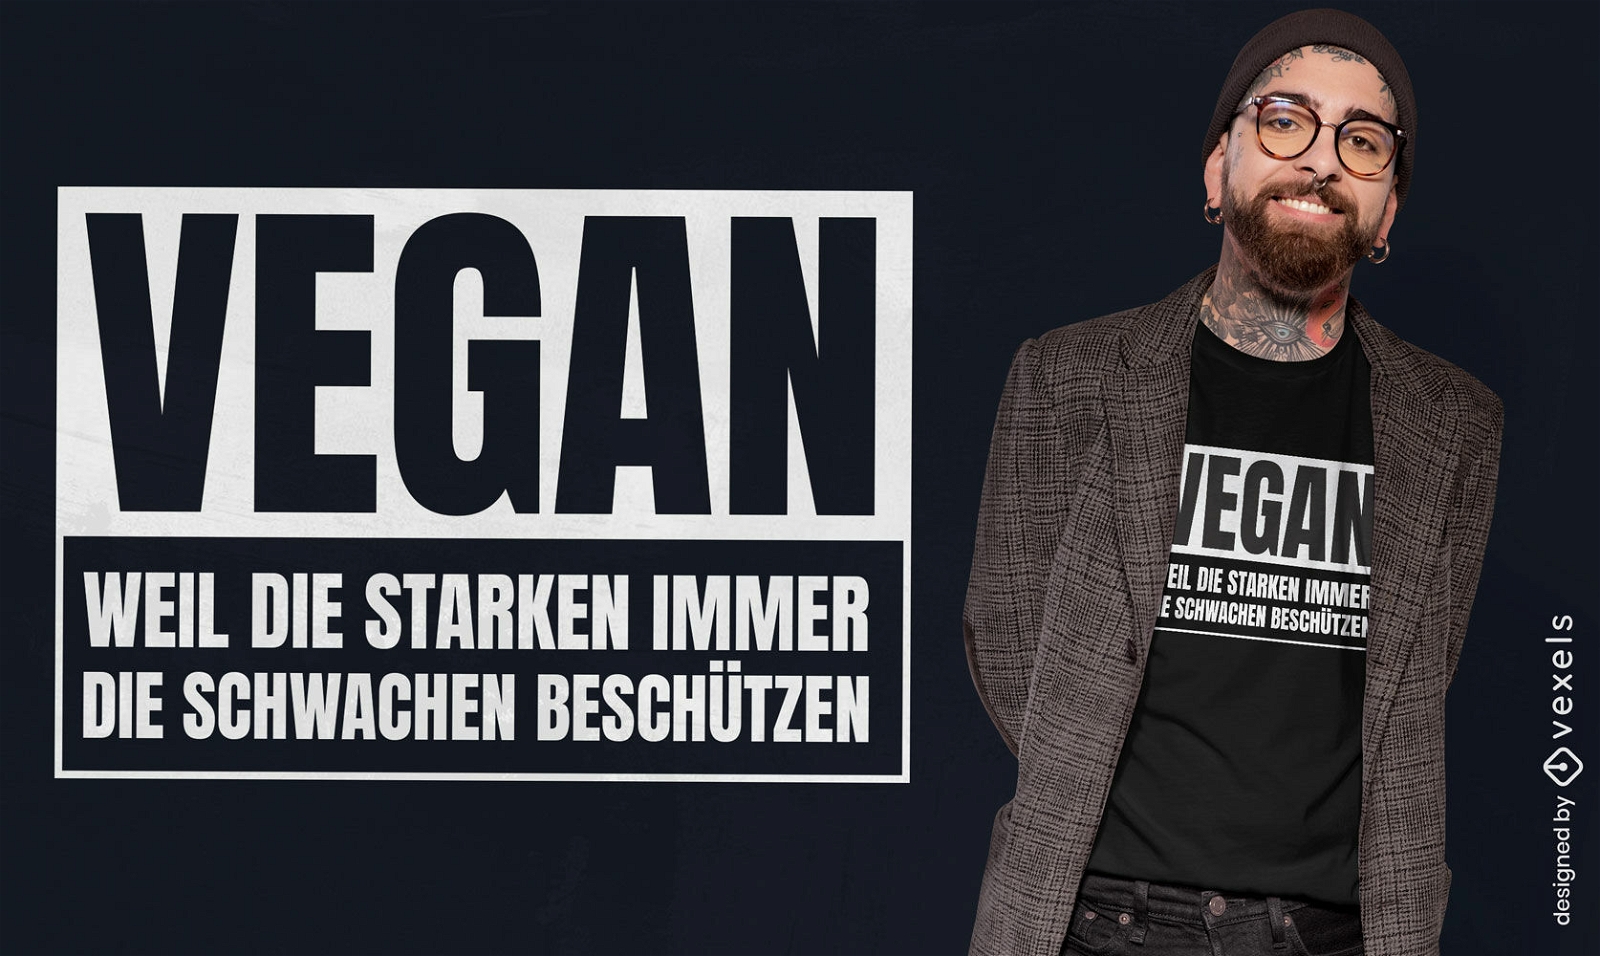 Vegan quote German t-shirt design